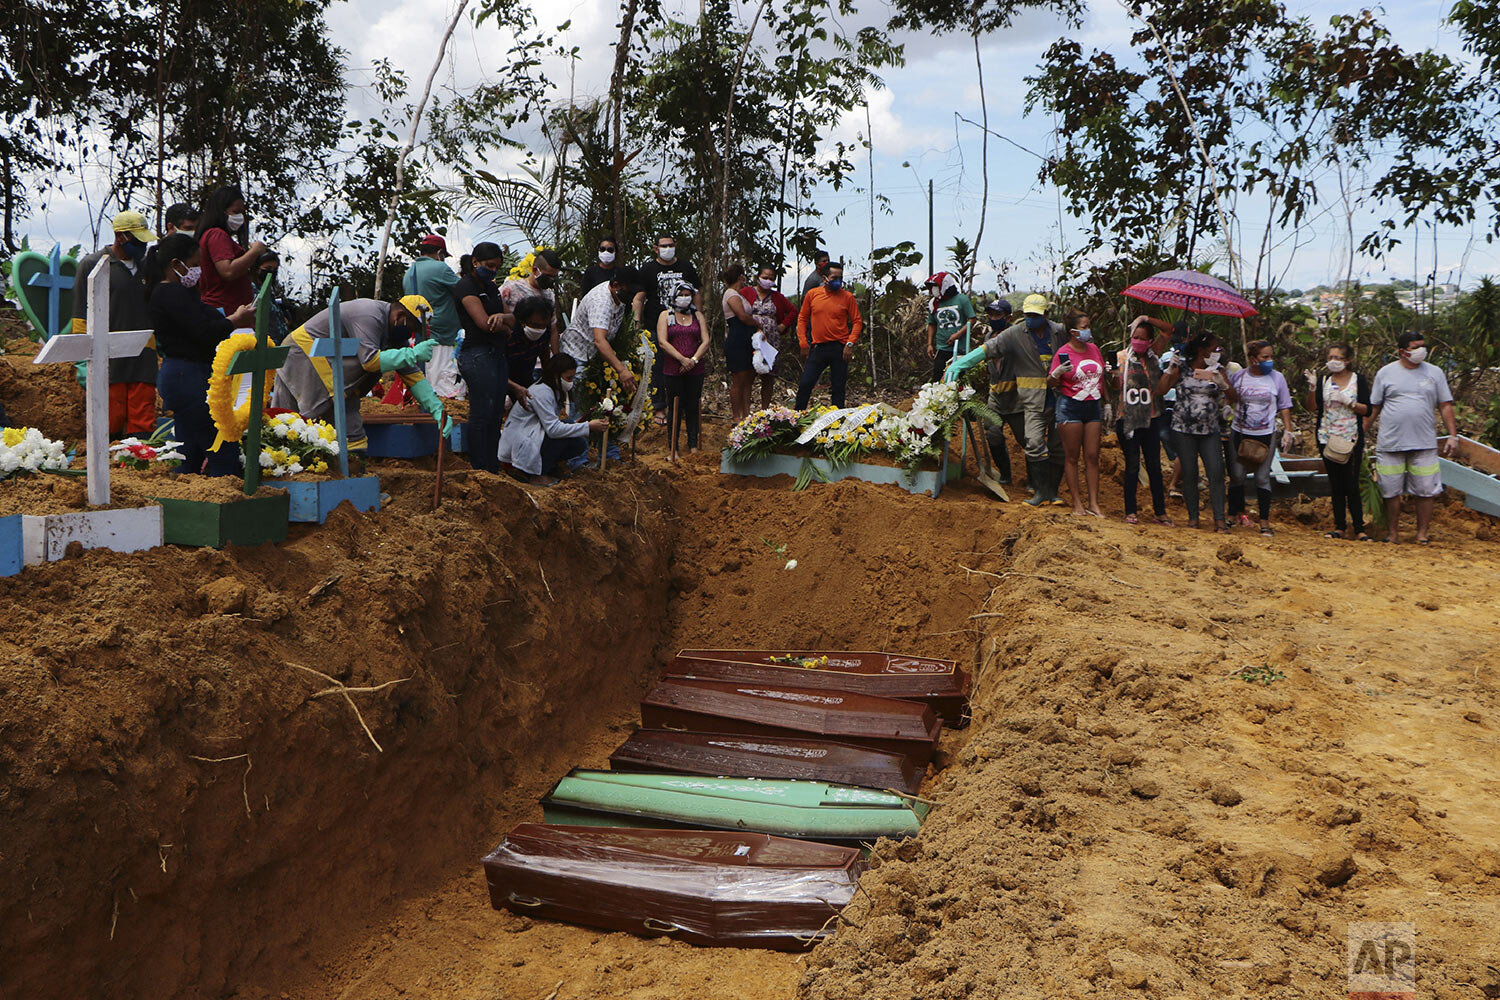  Relatives attend a mass burial at the Nossa Senhora Aparecida cemetery, in Manaus, Amazonas state, Brazil, April 21, 2020. (AP Photo/Edmar Barros) 